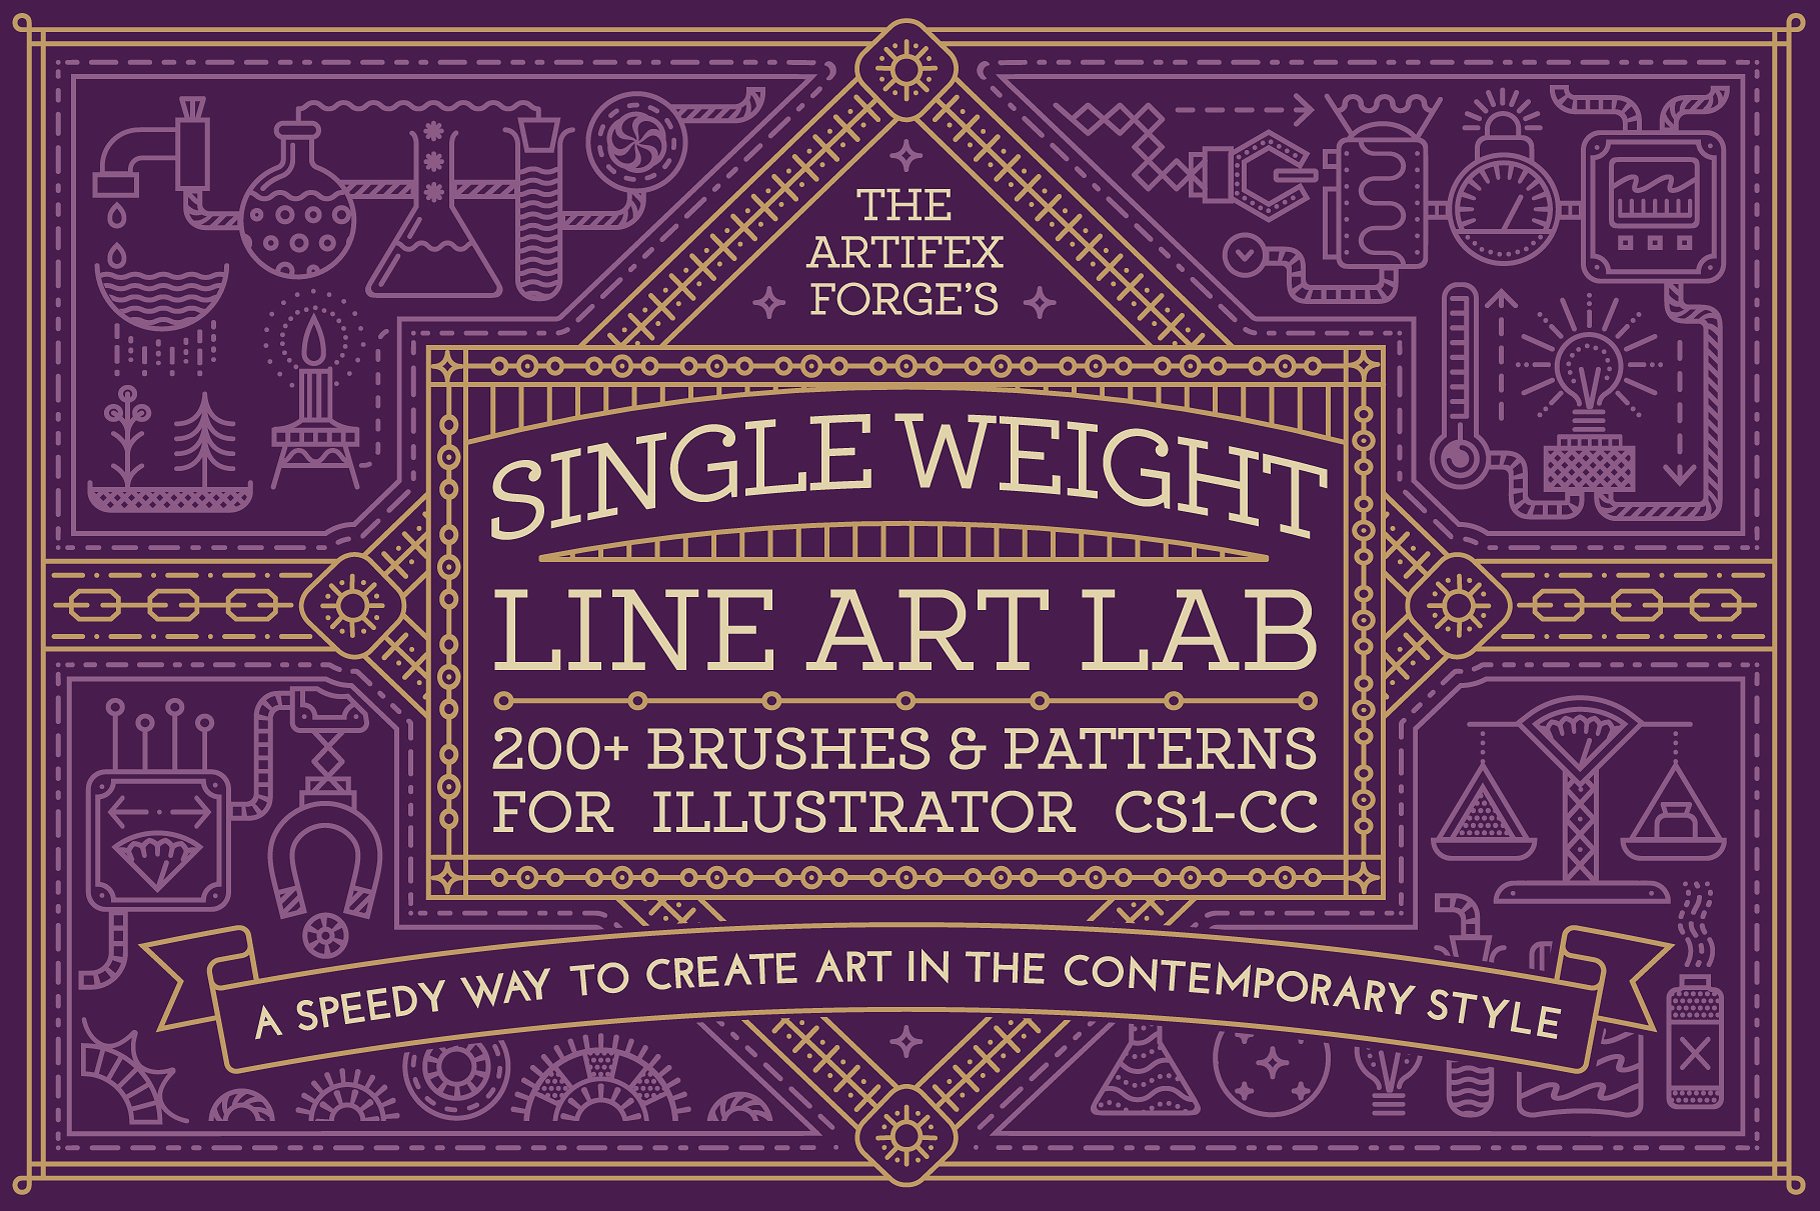 实验室物品线条图形AI笔刷&纹理 Single Weight Line Art Lab插图